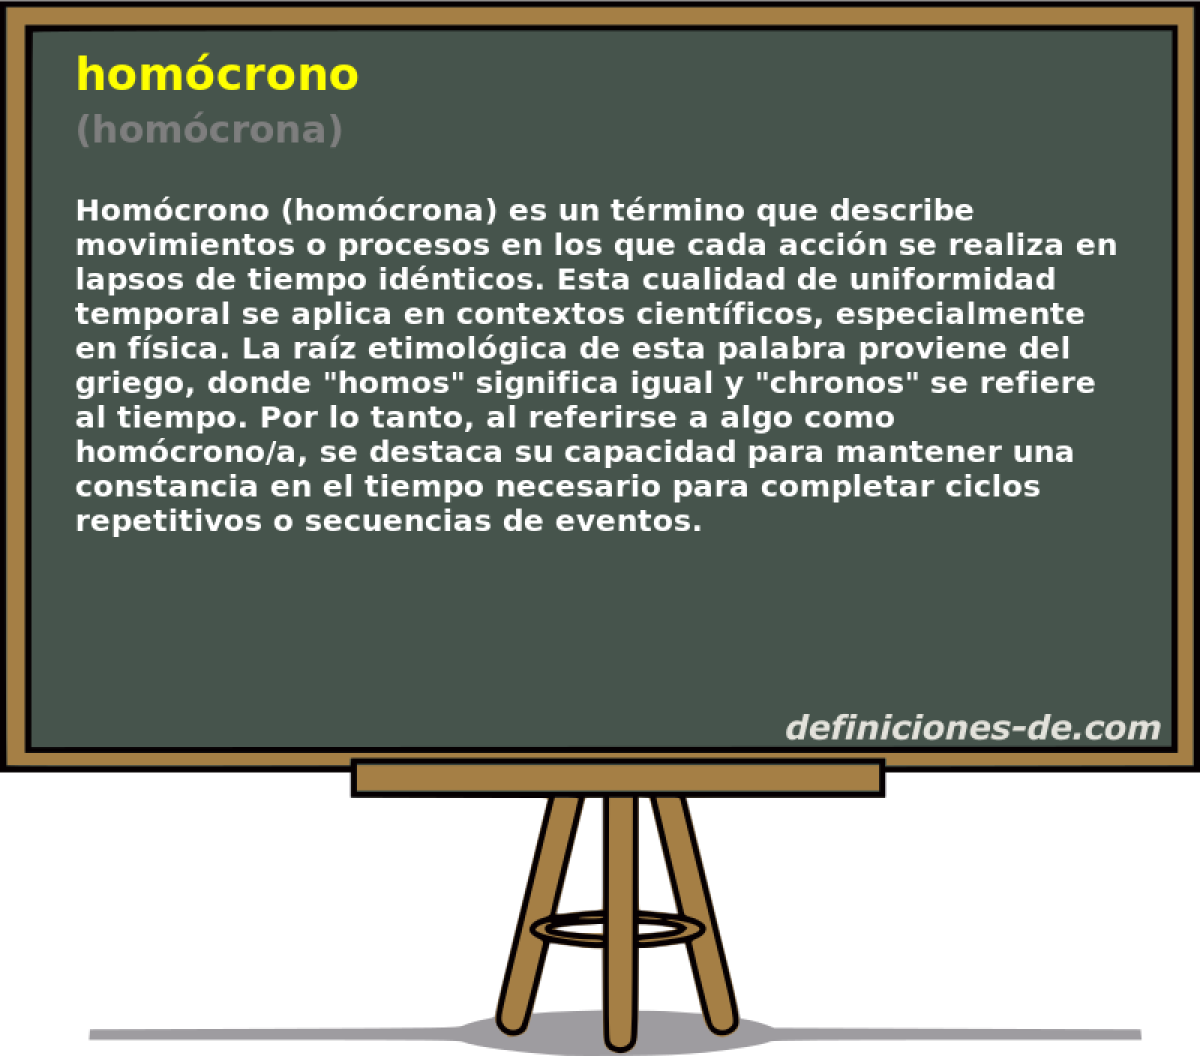 homcrono (homcrona)